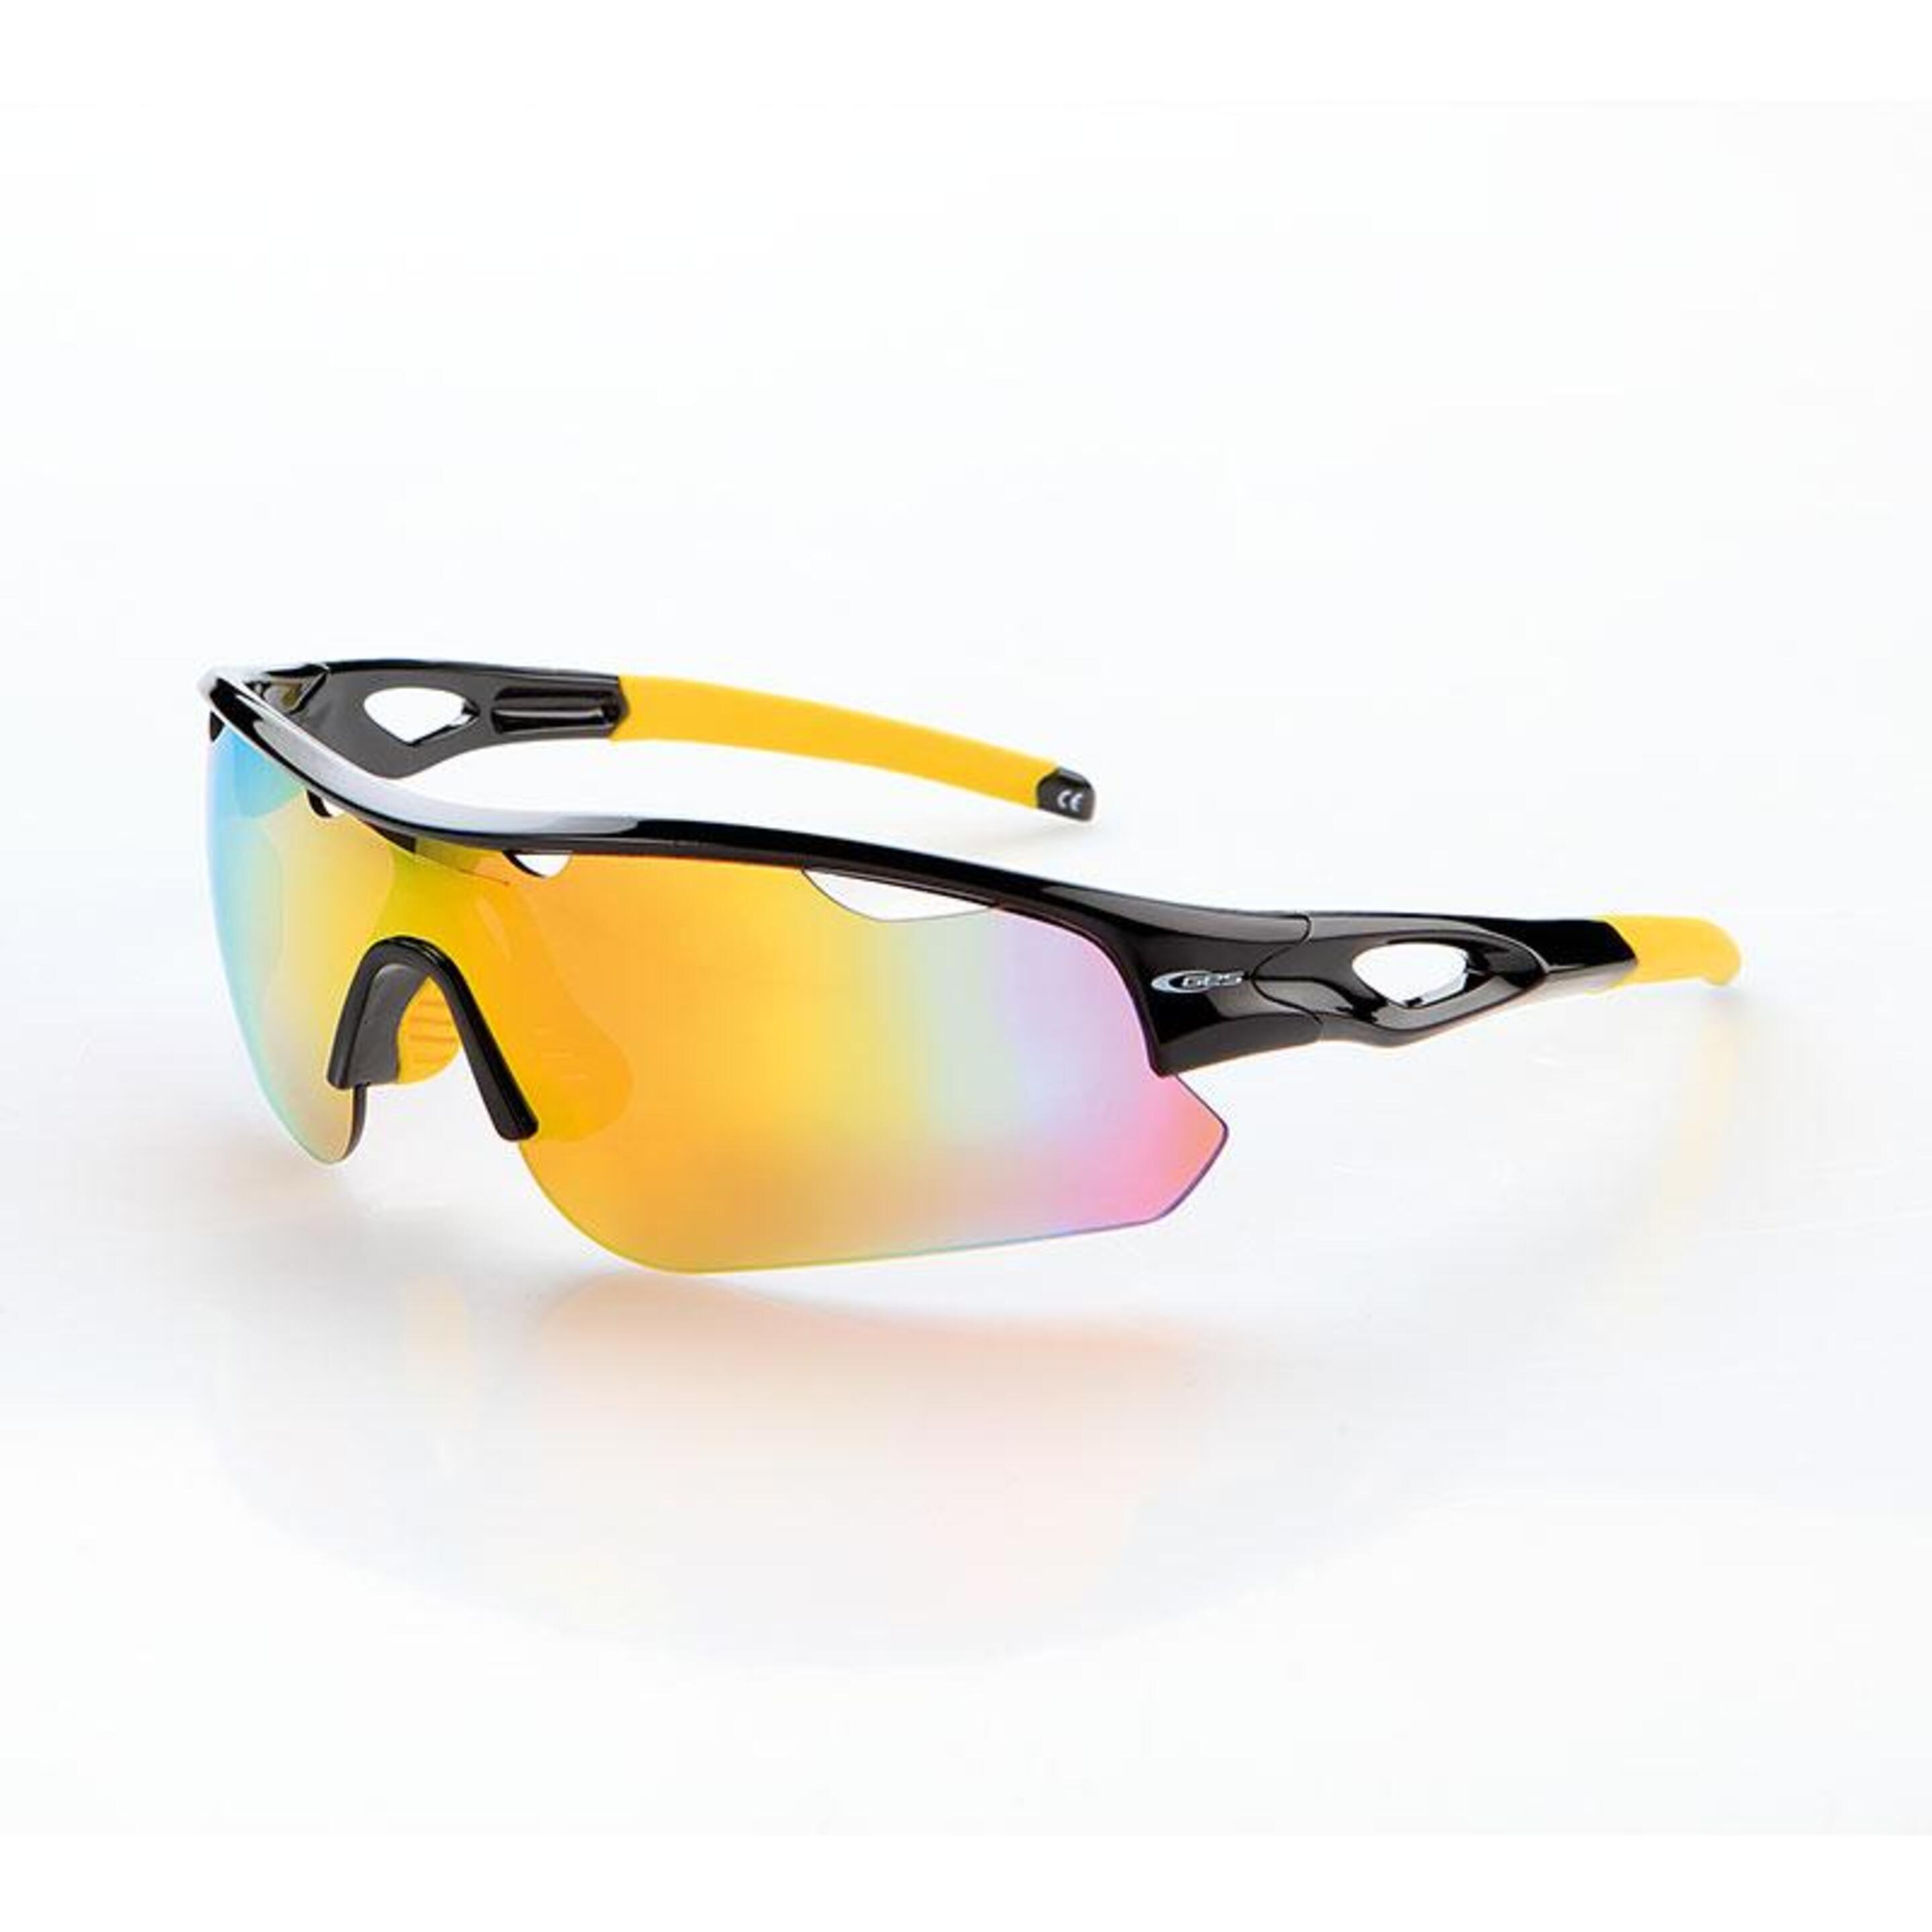 Gafas Ges 3 Lentes - negro-amarillo - 